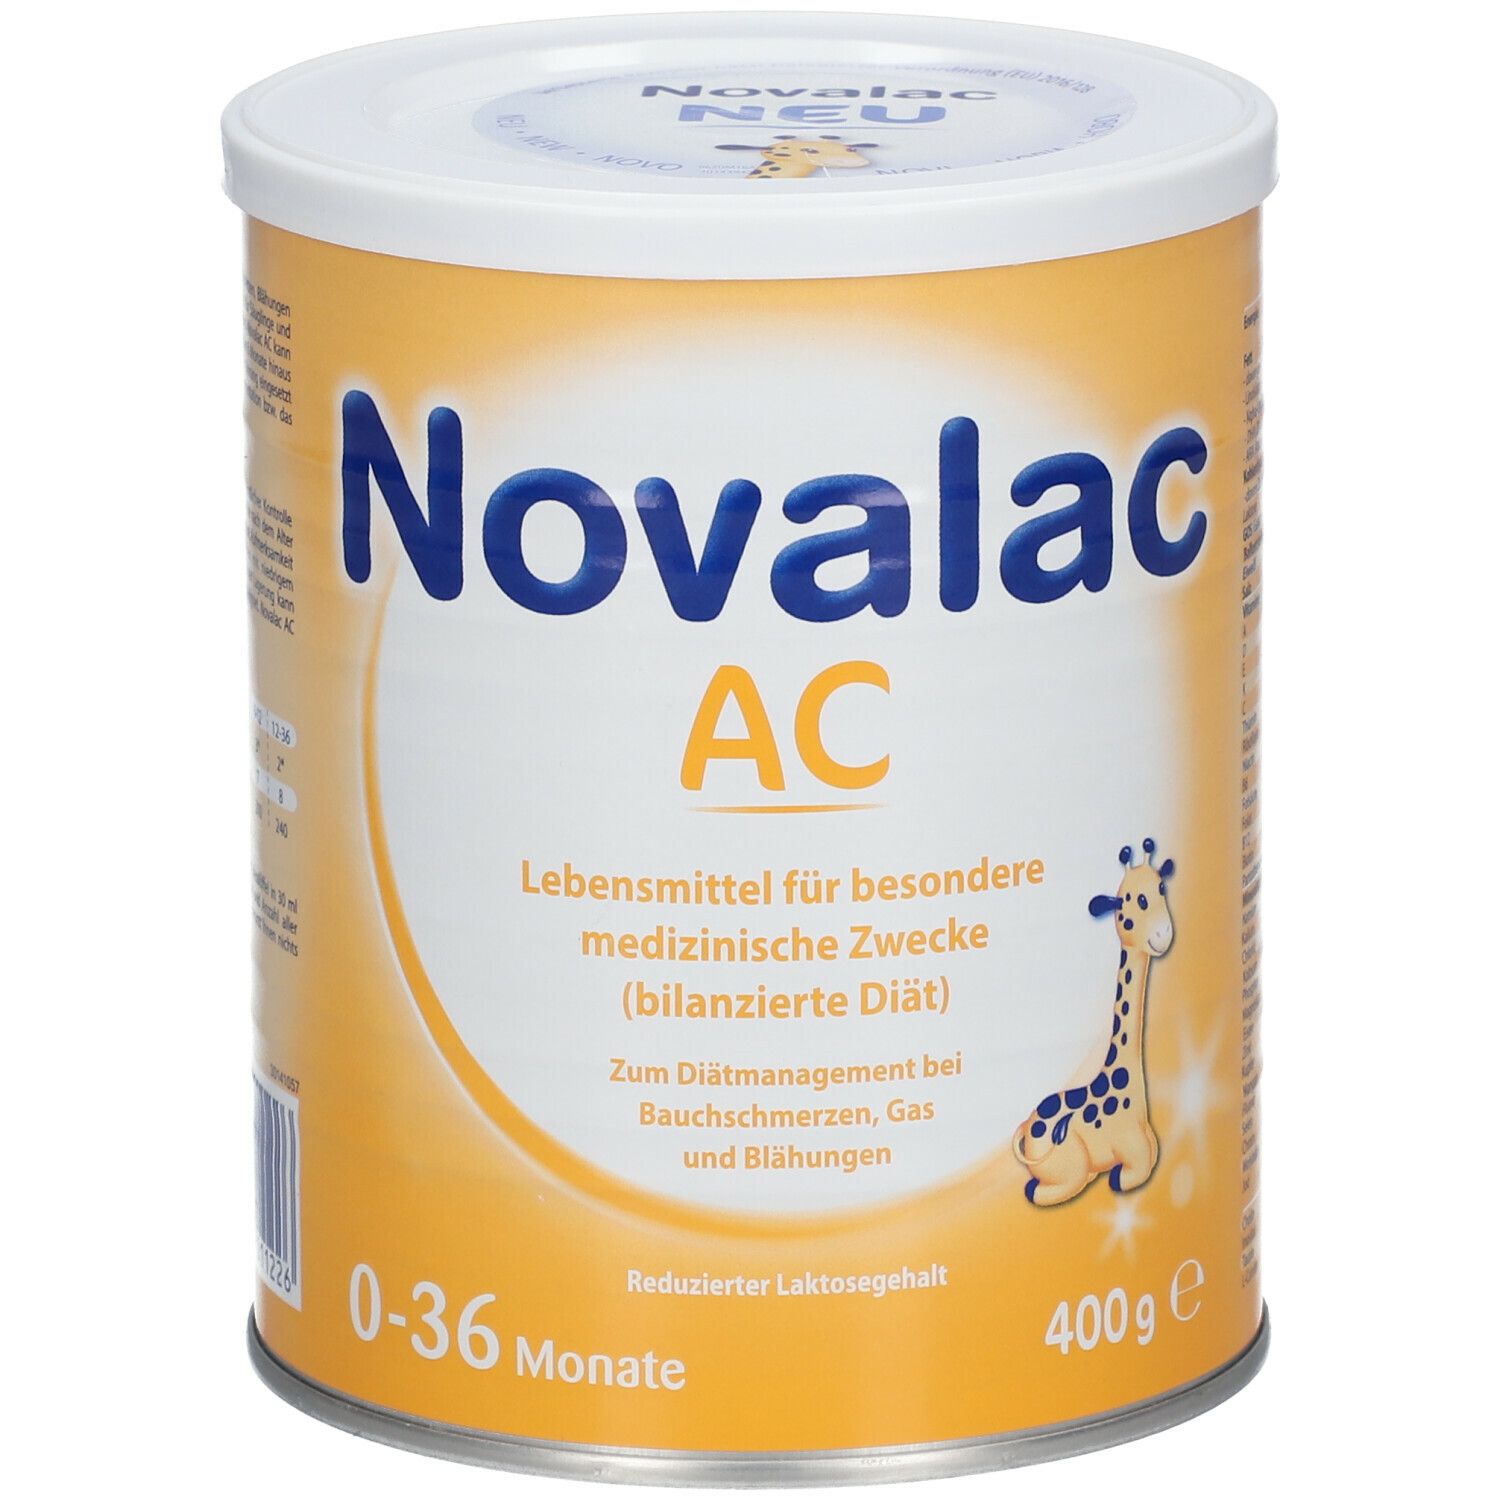 Novalac AC Spezialnahrung von Geburt an